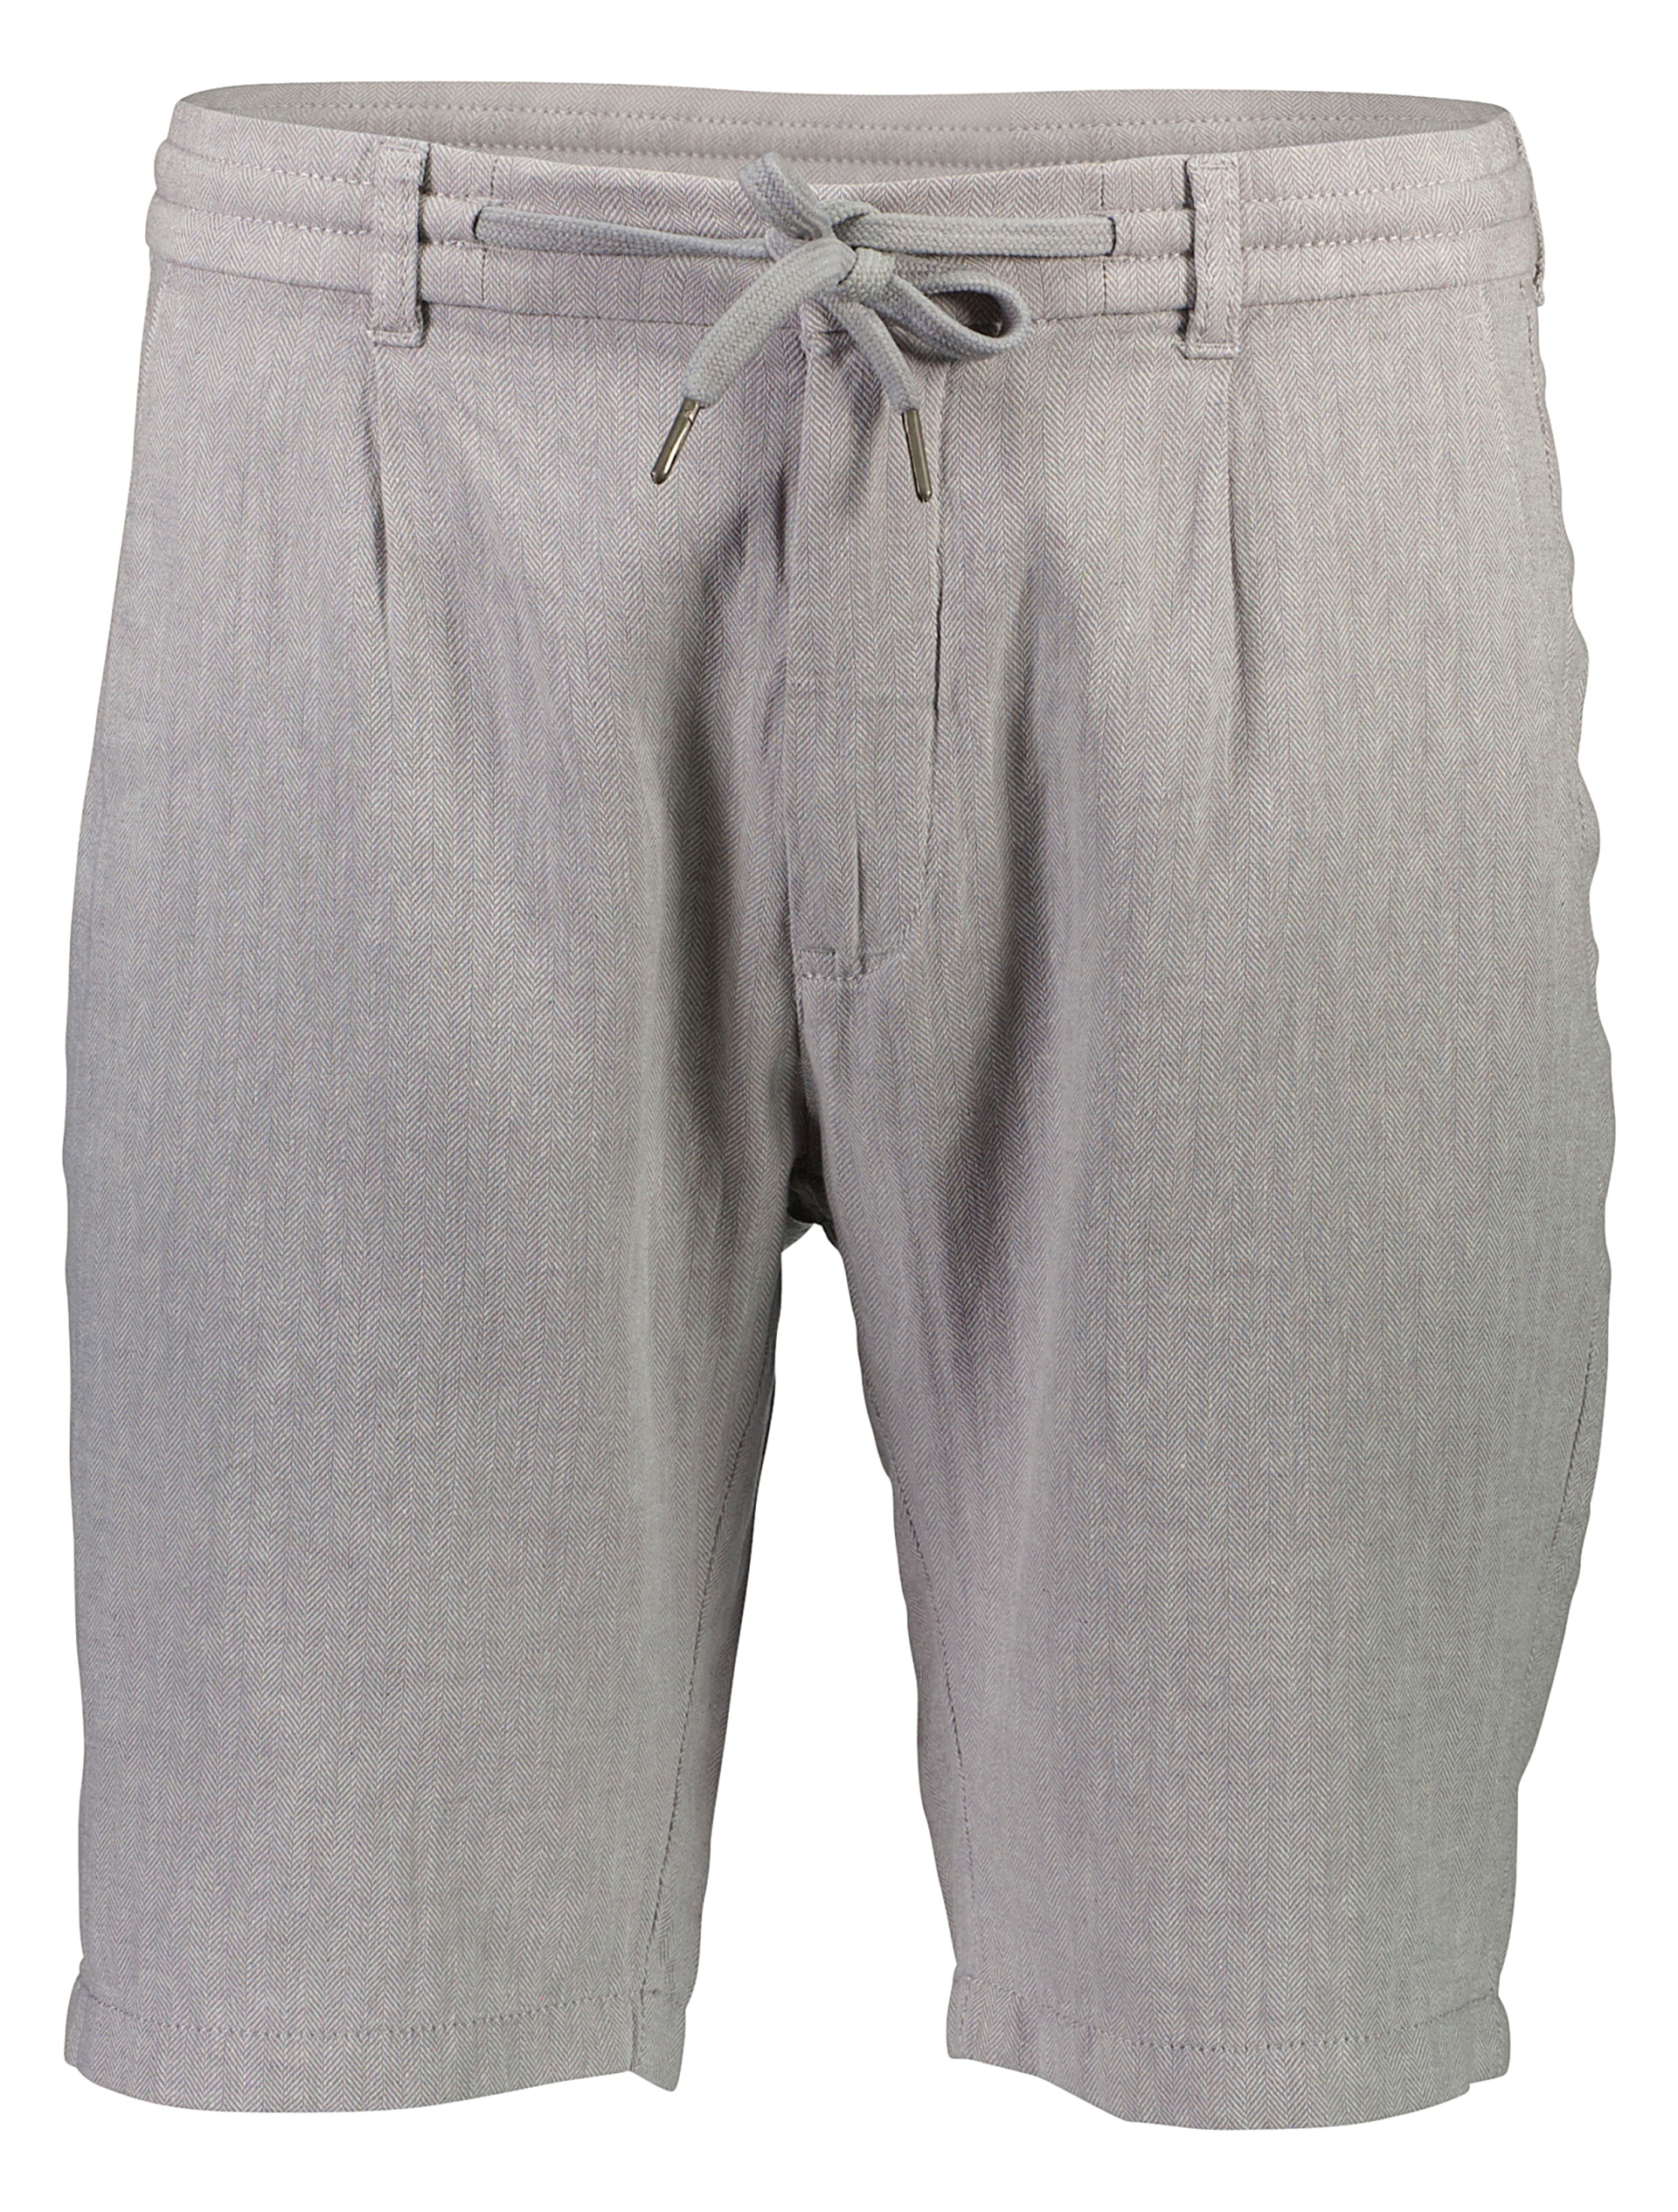 Lindbergh Linen shorts grey / grey mel